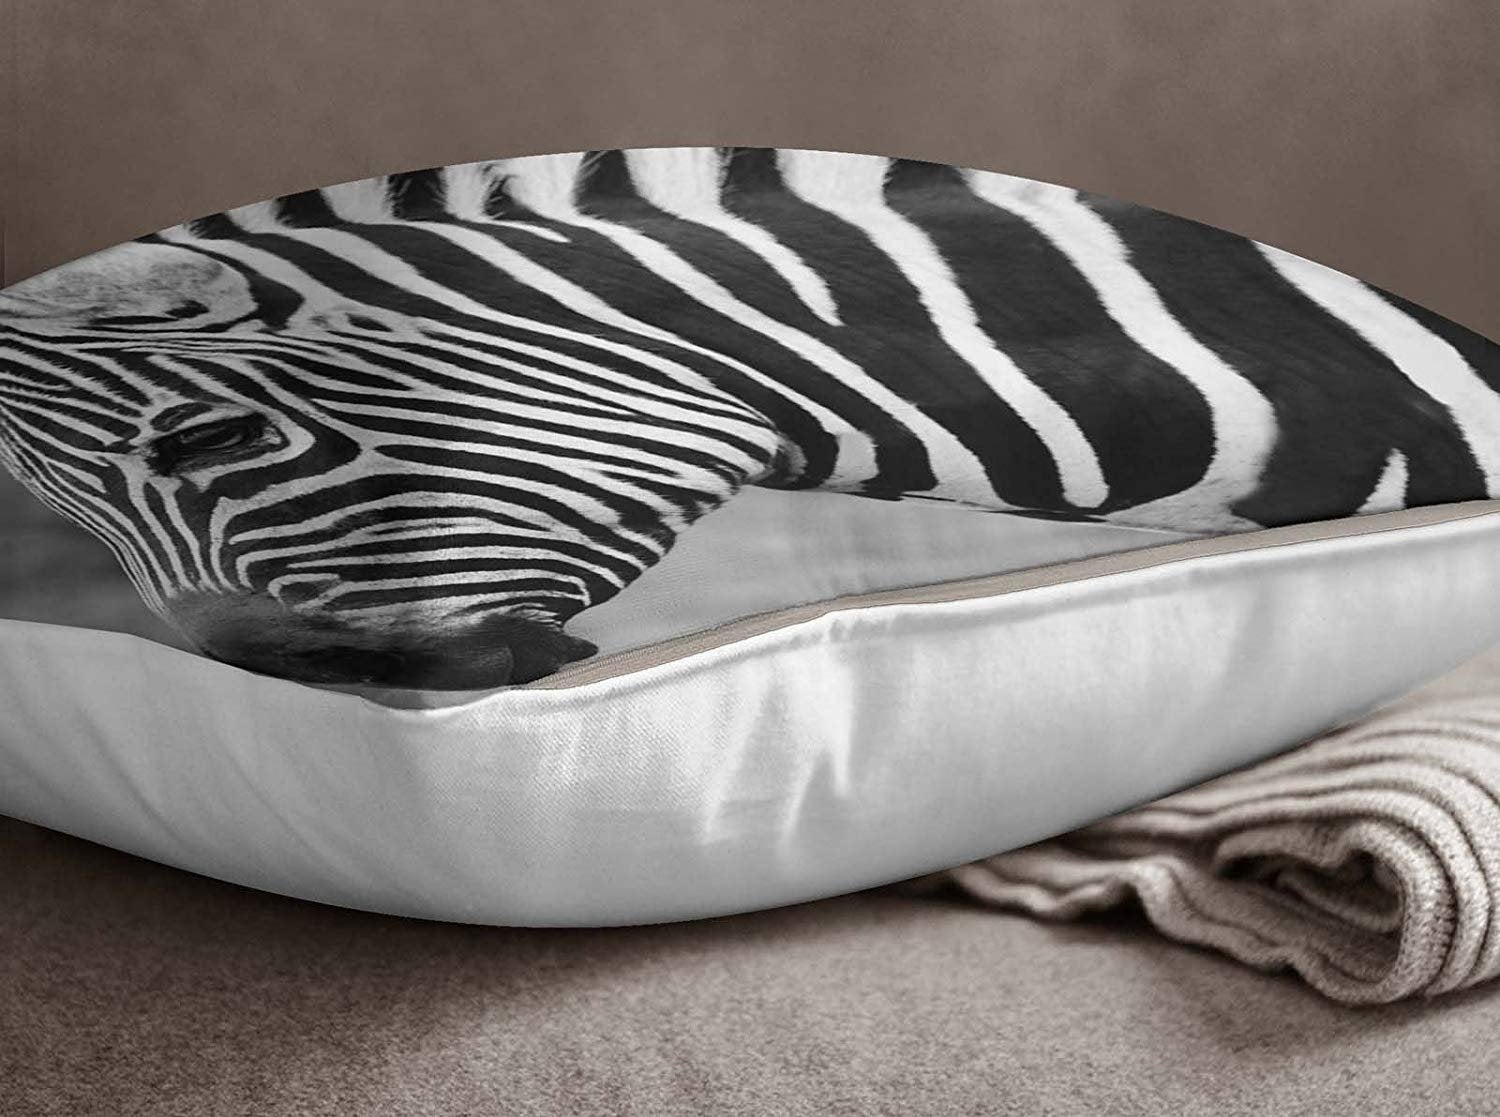 S4Sassy Black Zebra Face Digital Print Decorative Pillow Square Cushion Cover